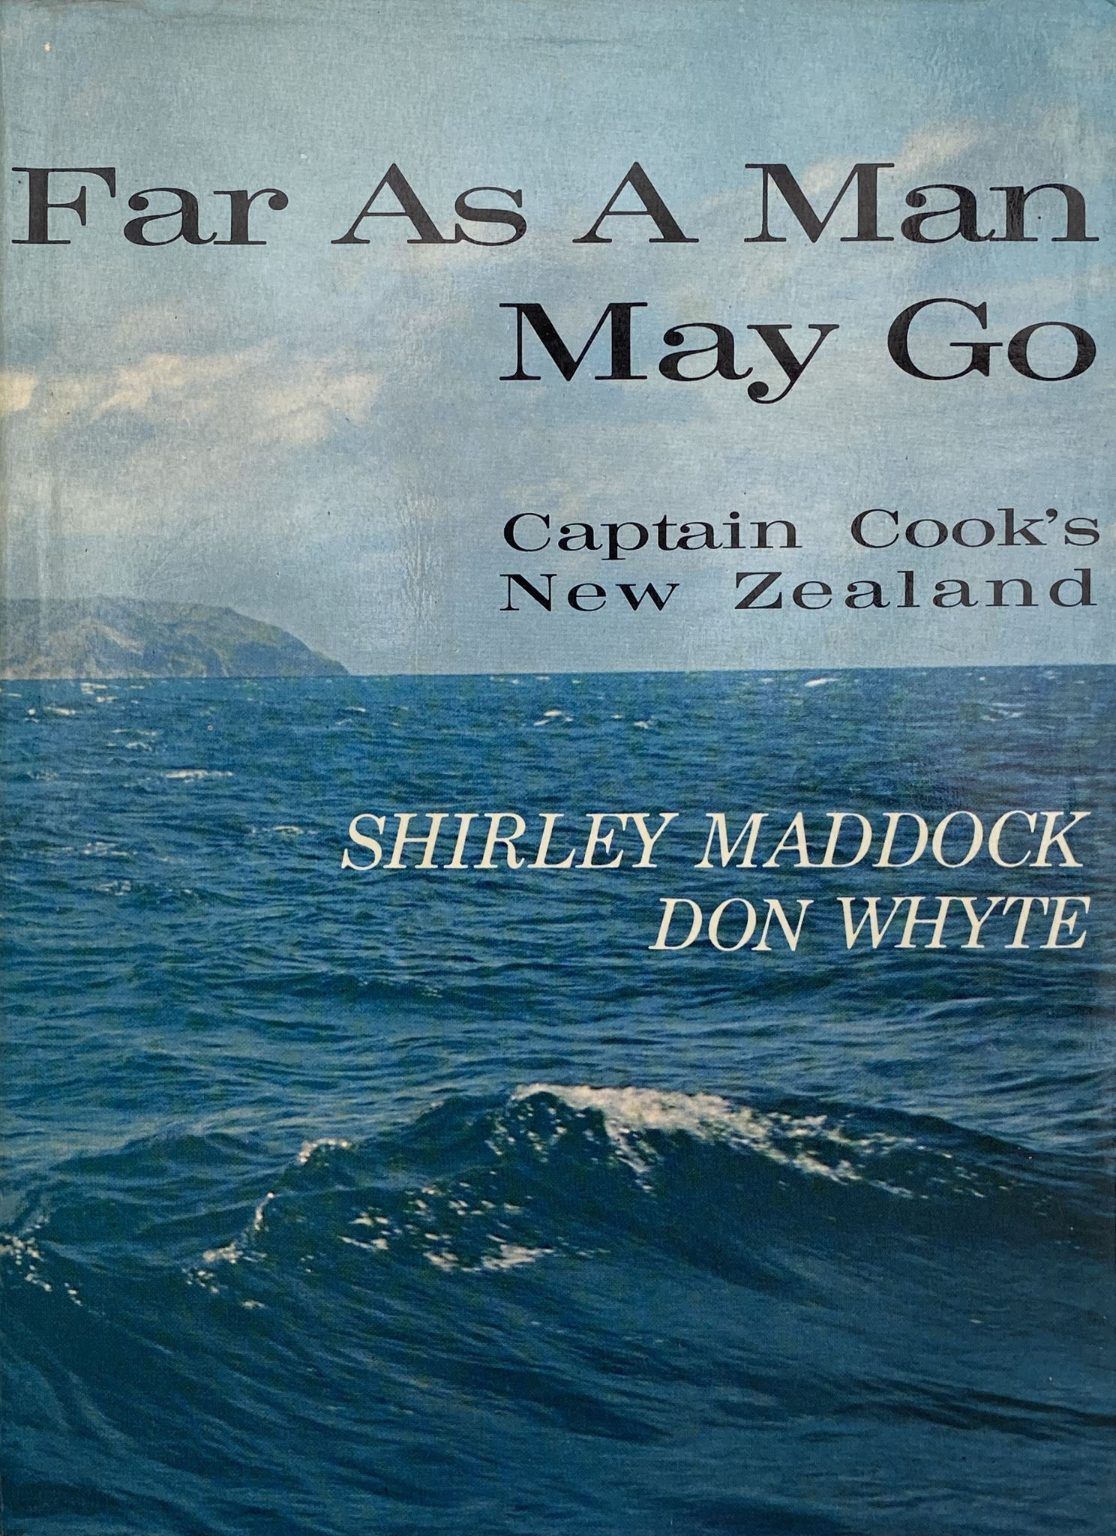 FAR AS A MAN MAY GO: Captain Cook's New Zealand